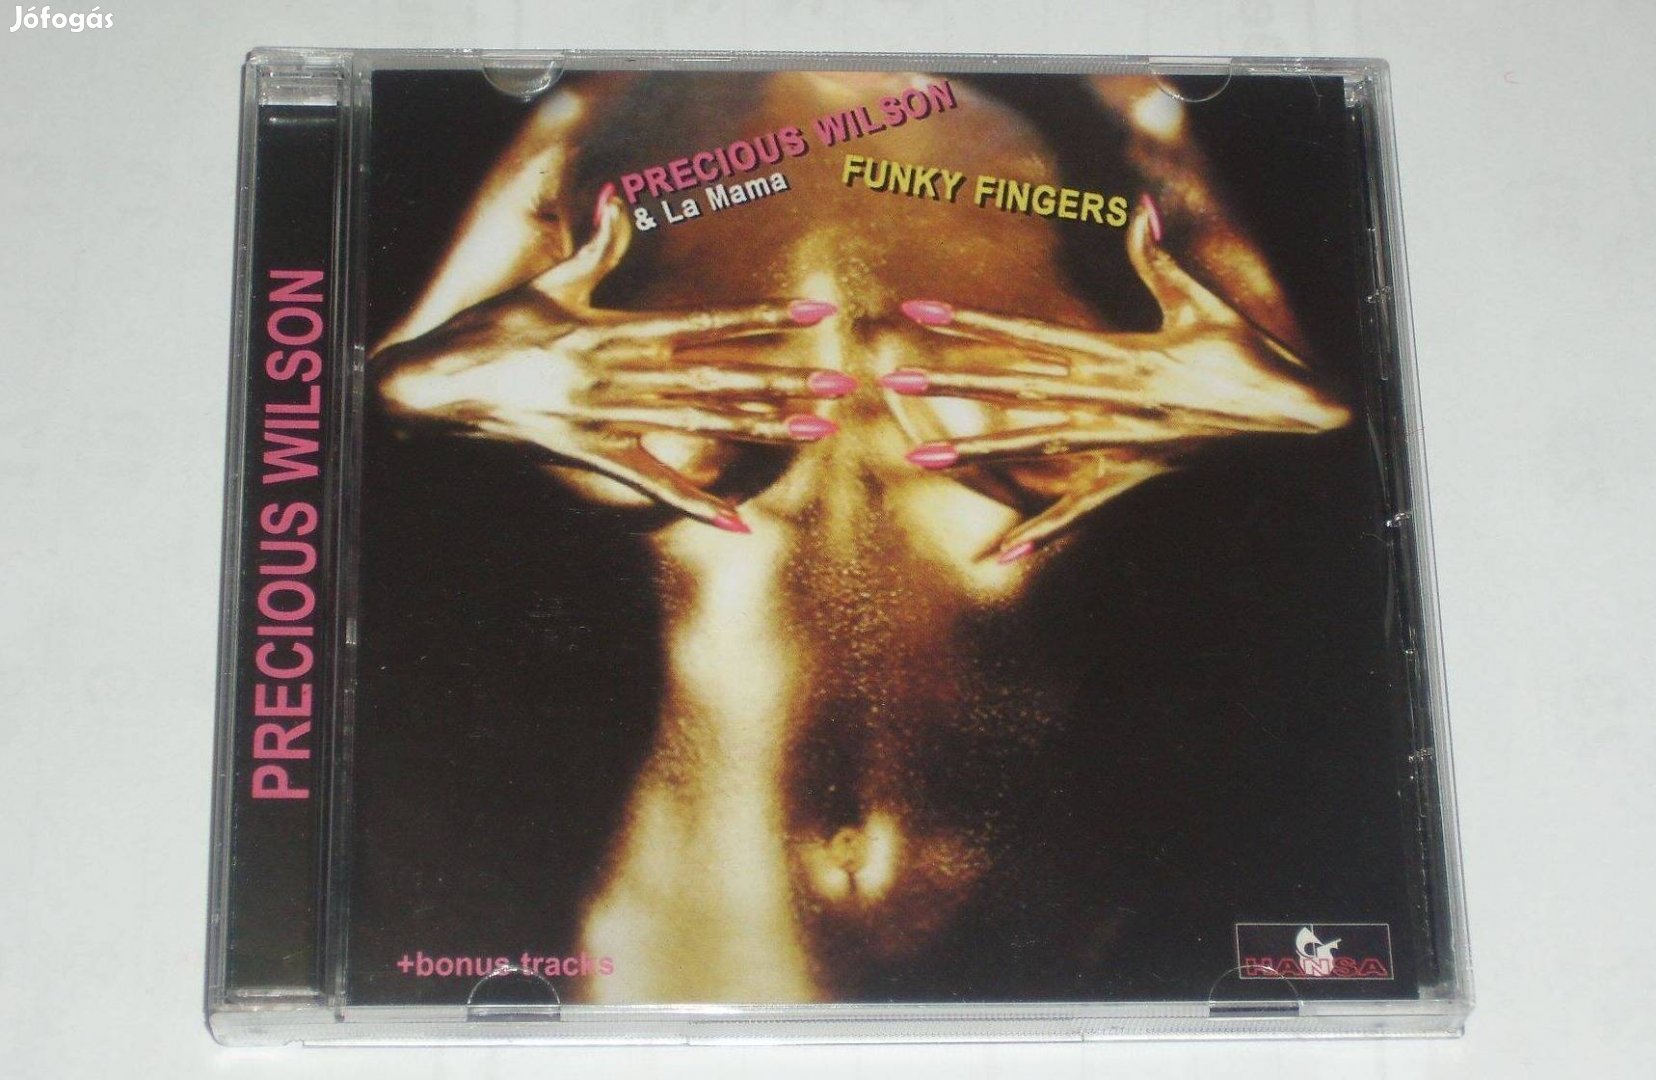 Precious Wilson - Funky Fingers (Medley) CD Disco Eruption